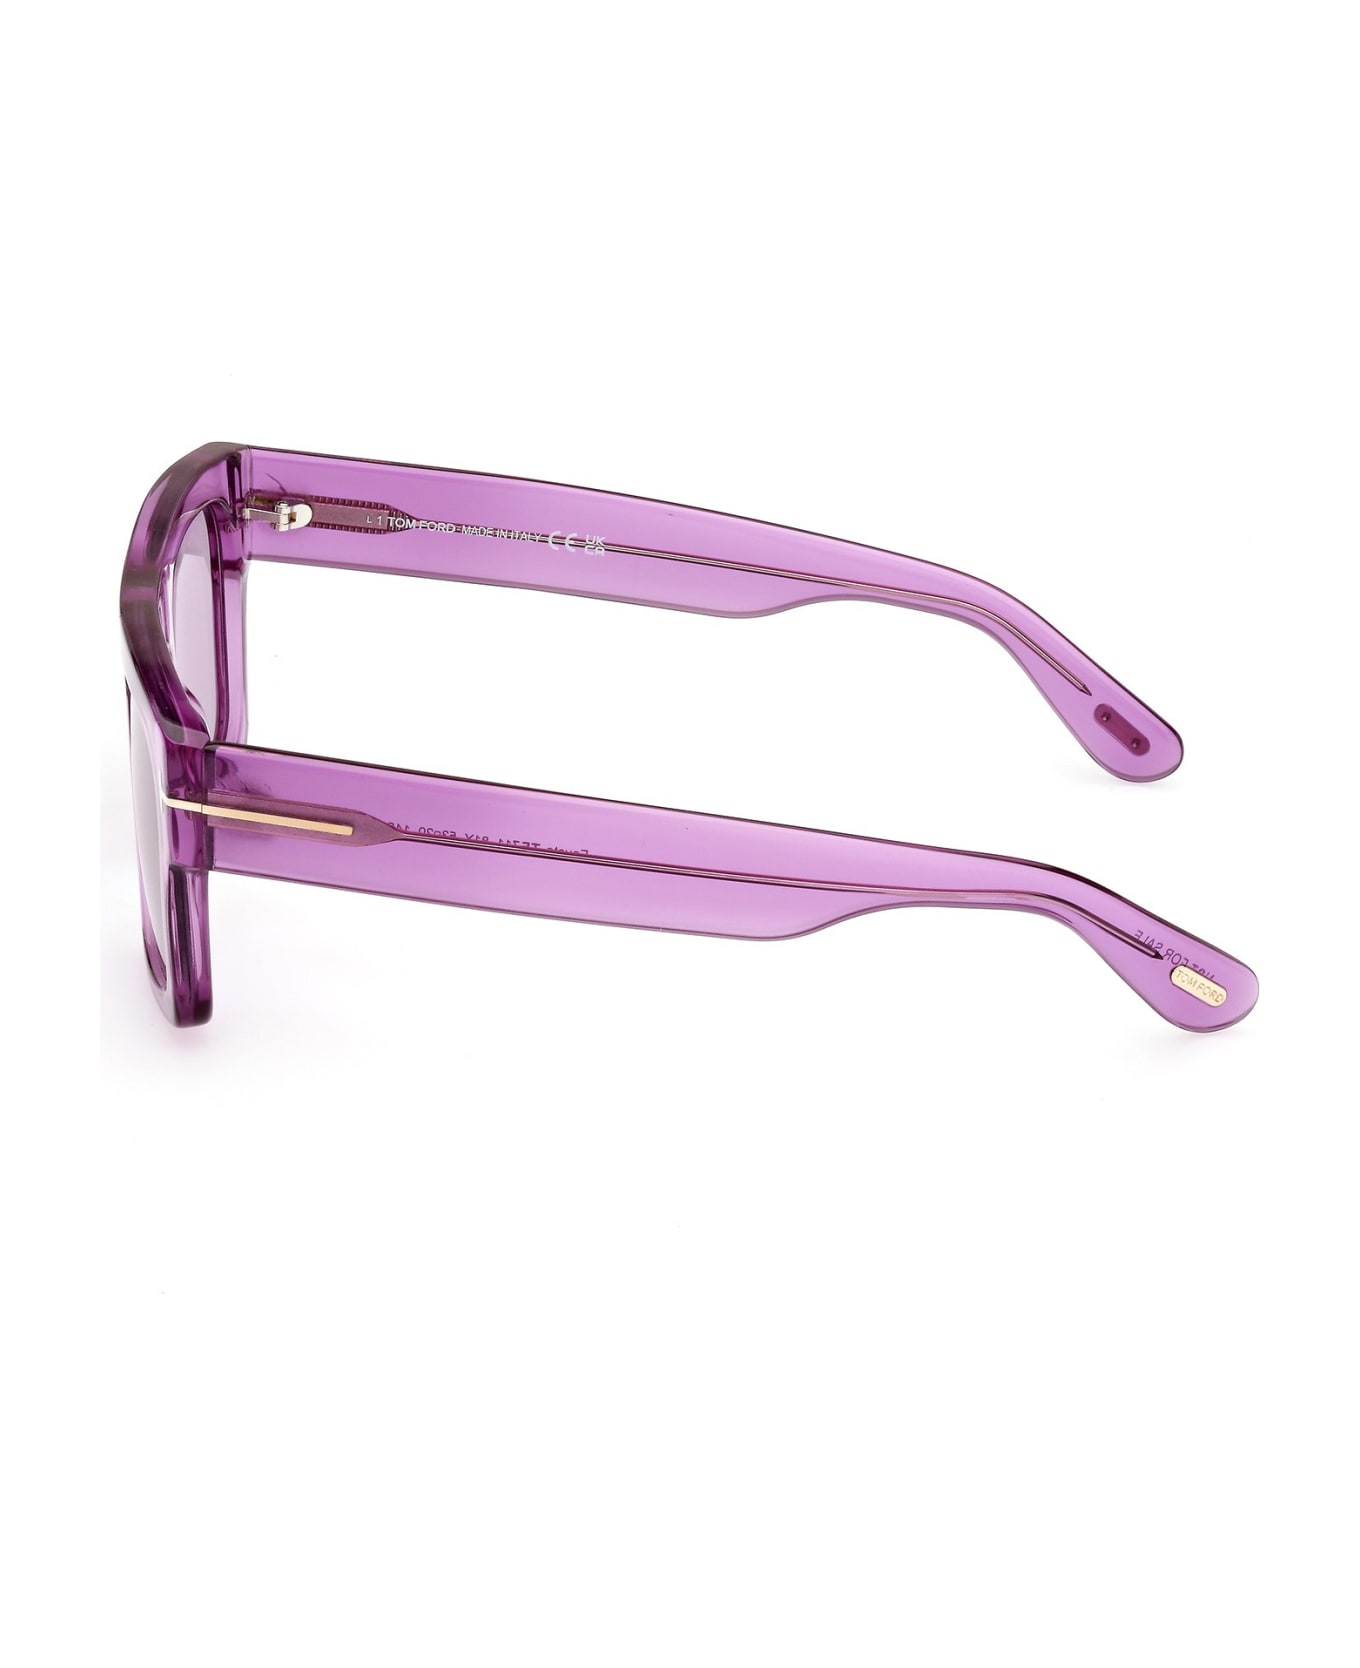 Tom Ford Eyewear Eyewear - Viola/Viola